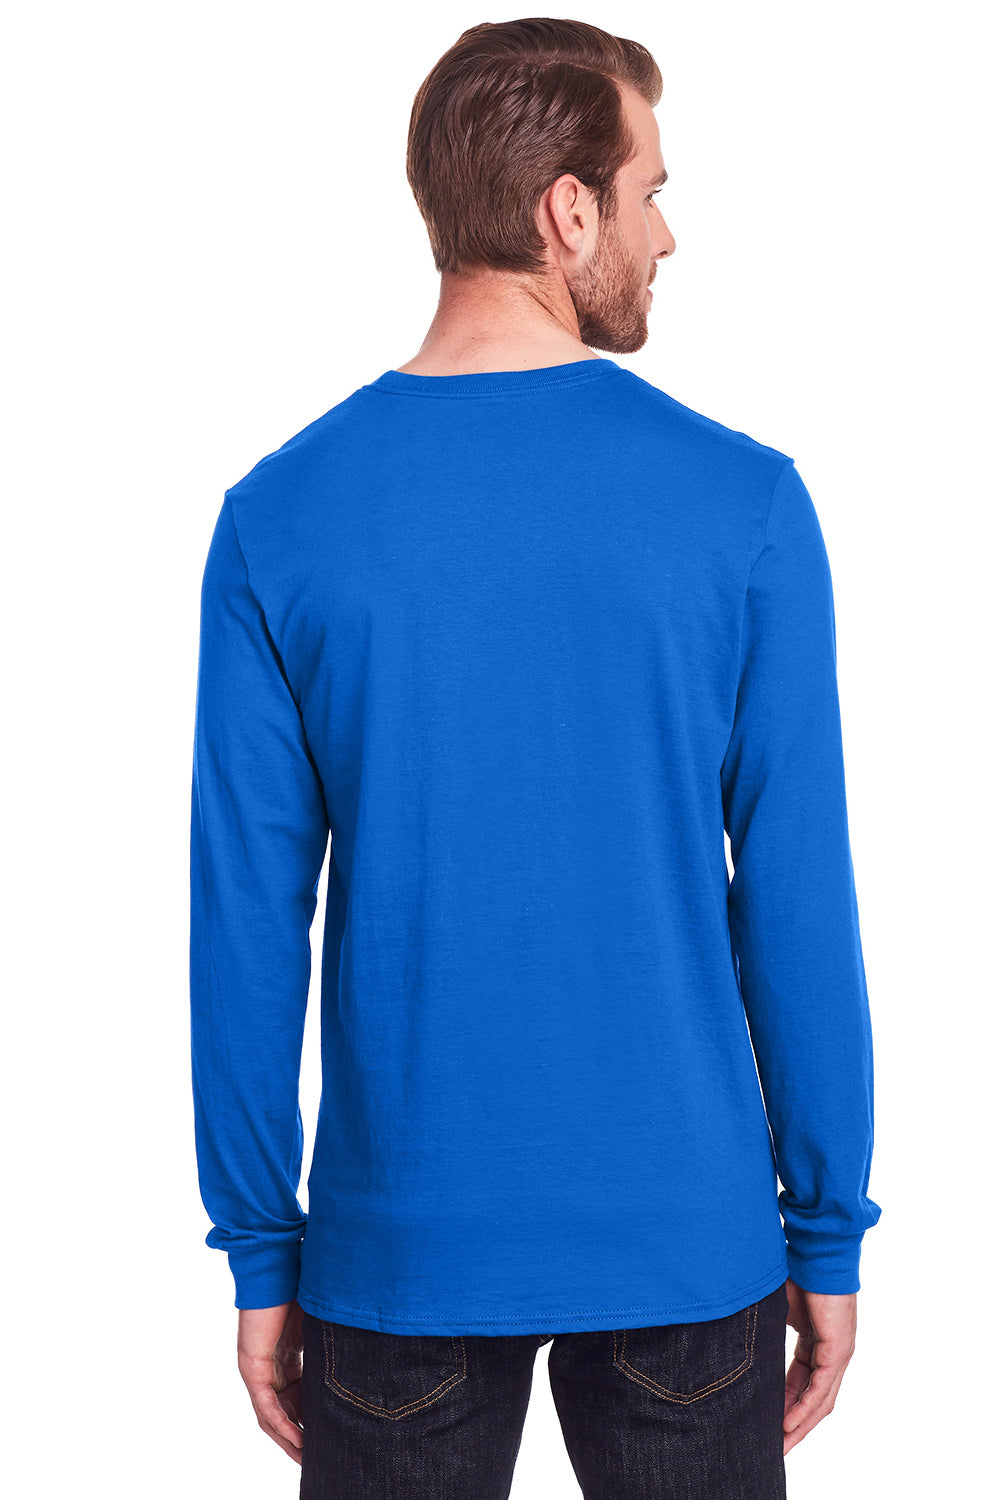 Fruit Of The Loom IC47LSR Mens Iconic Long Sleeve Crewneck T-Shirt Royal Blue Back